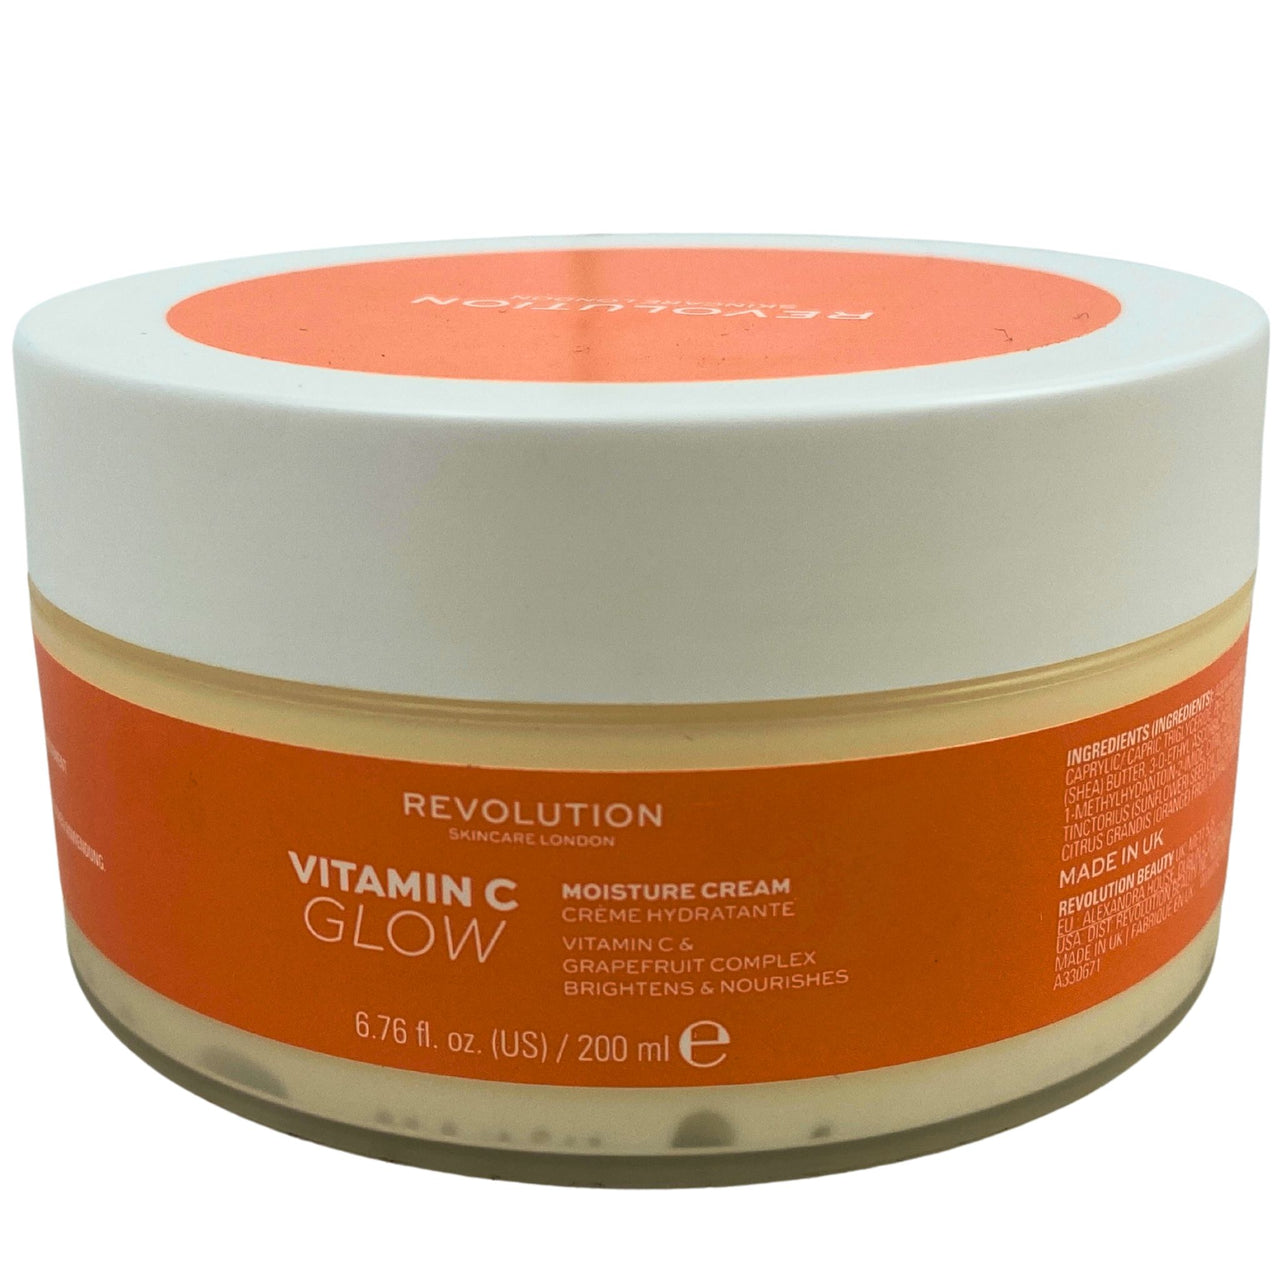 Revolution Skincare London Vitamin C Glow Moisture Cream with Grapefruit Complex